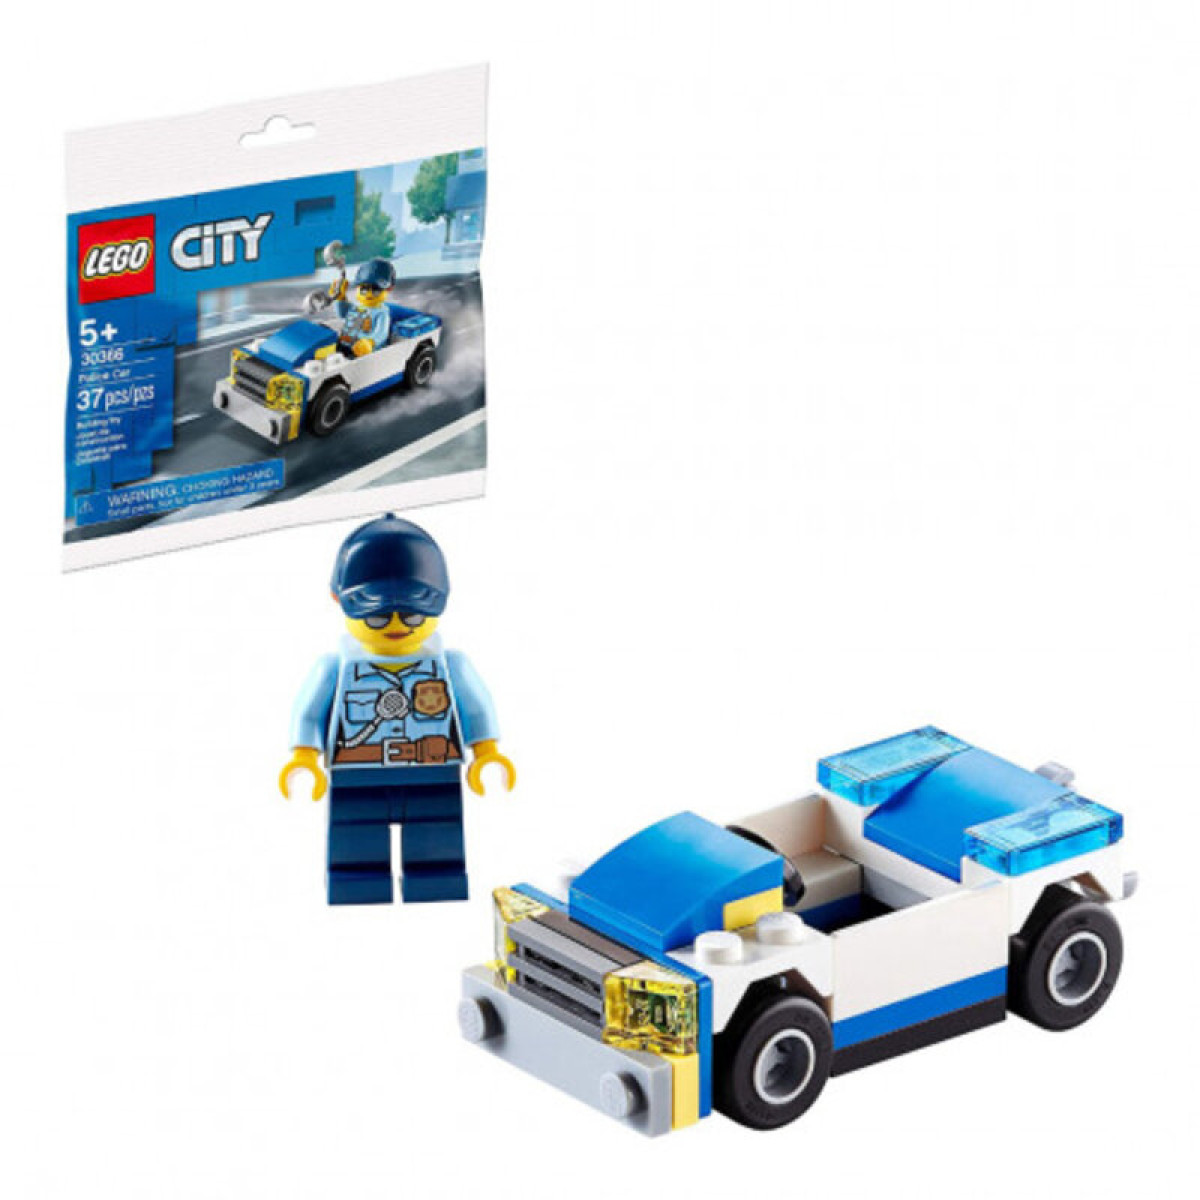 LEGO CITY POLICE CAR 30366